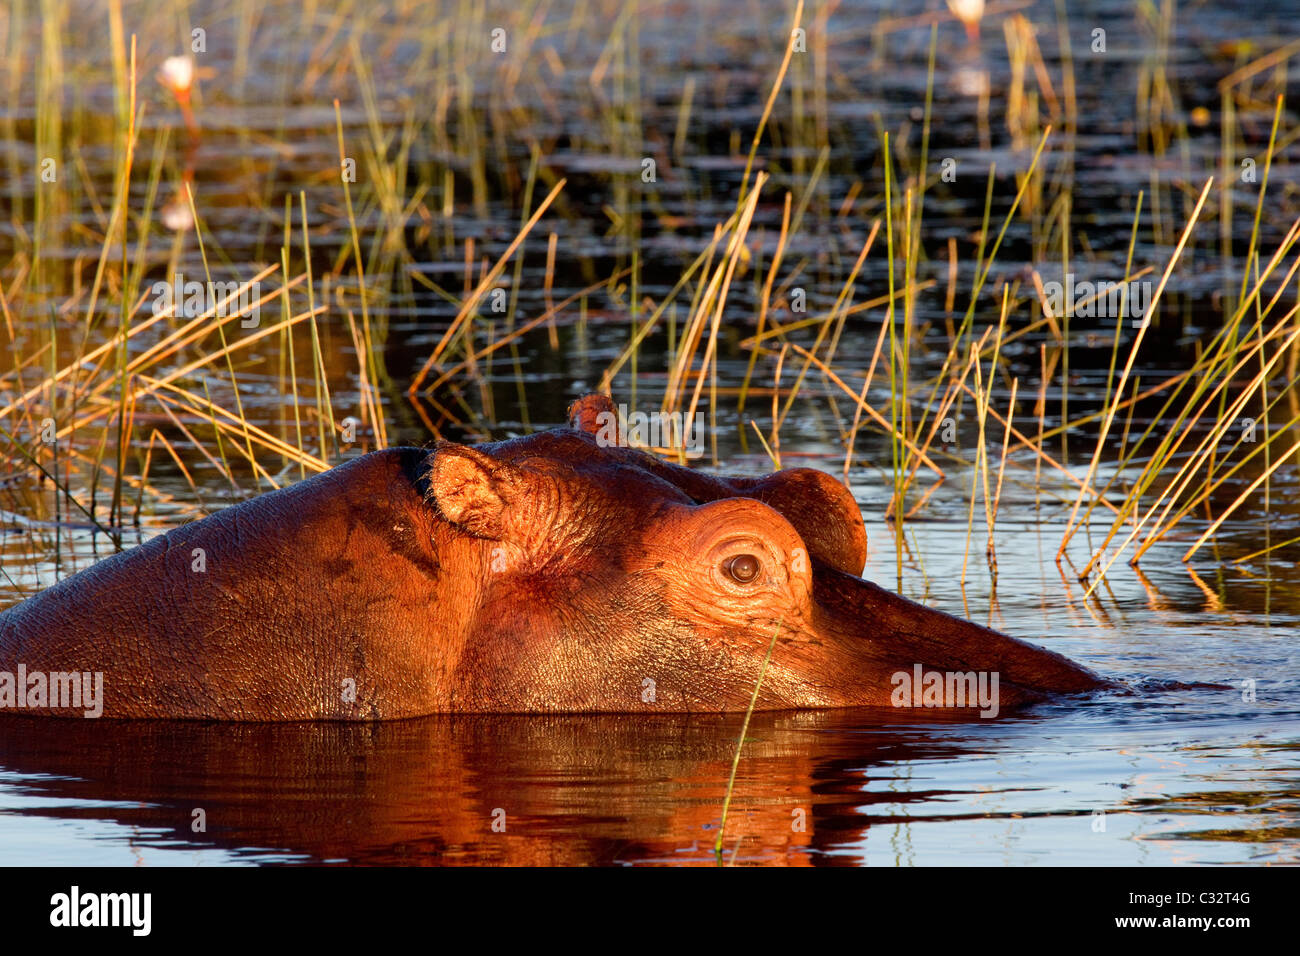 Submerged hippopotamus Stock Photo